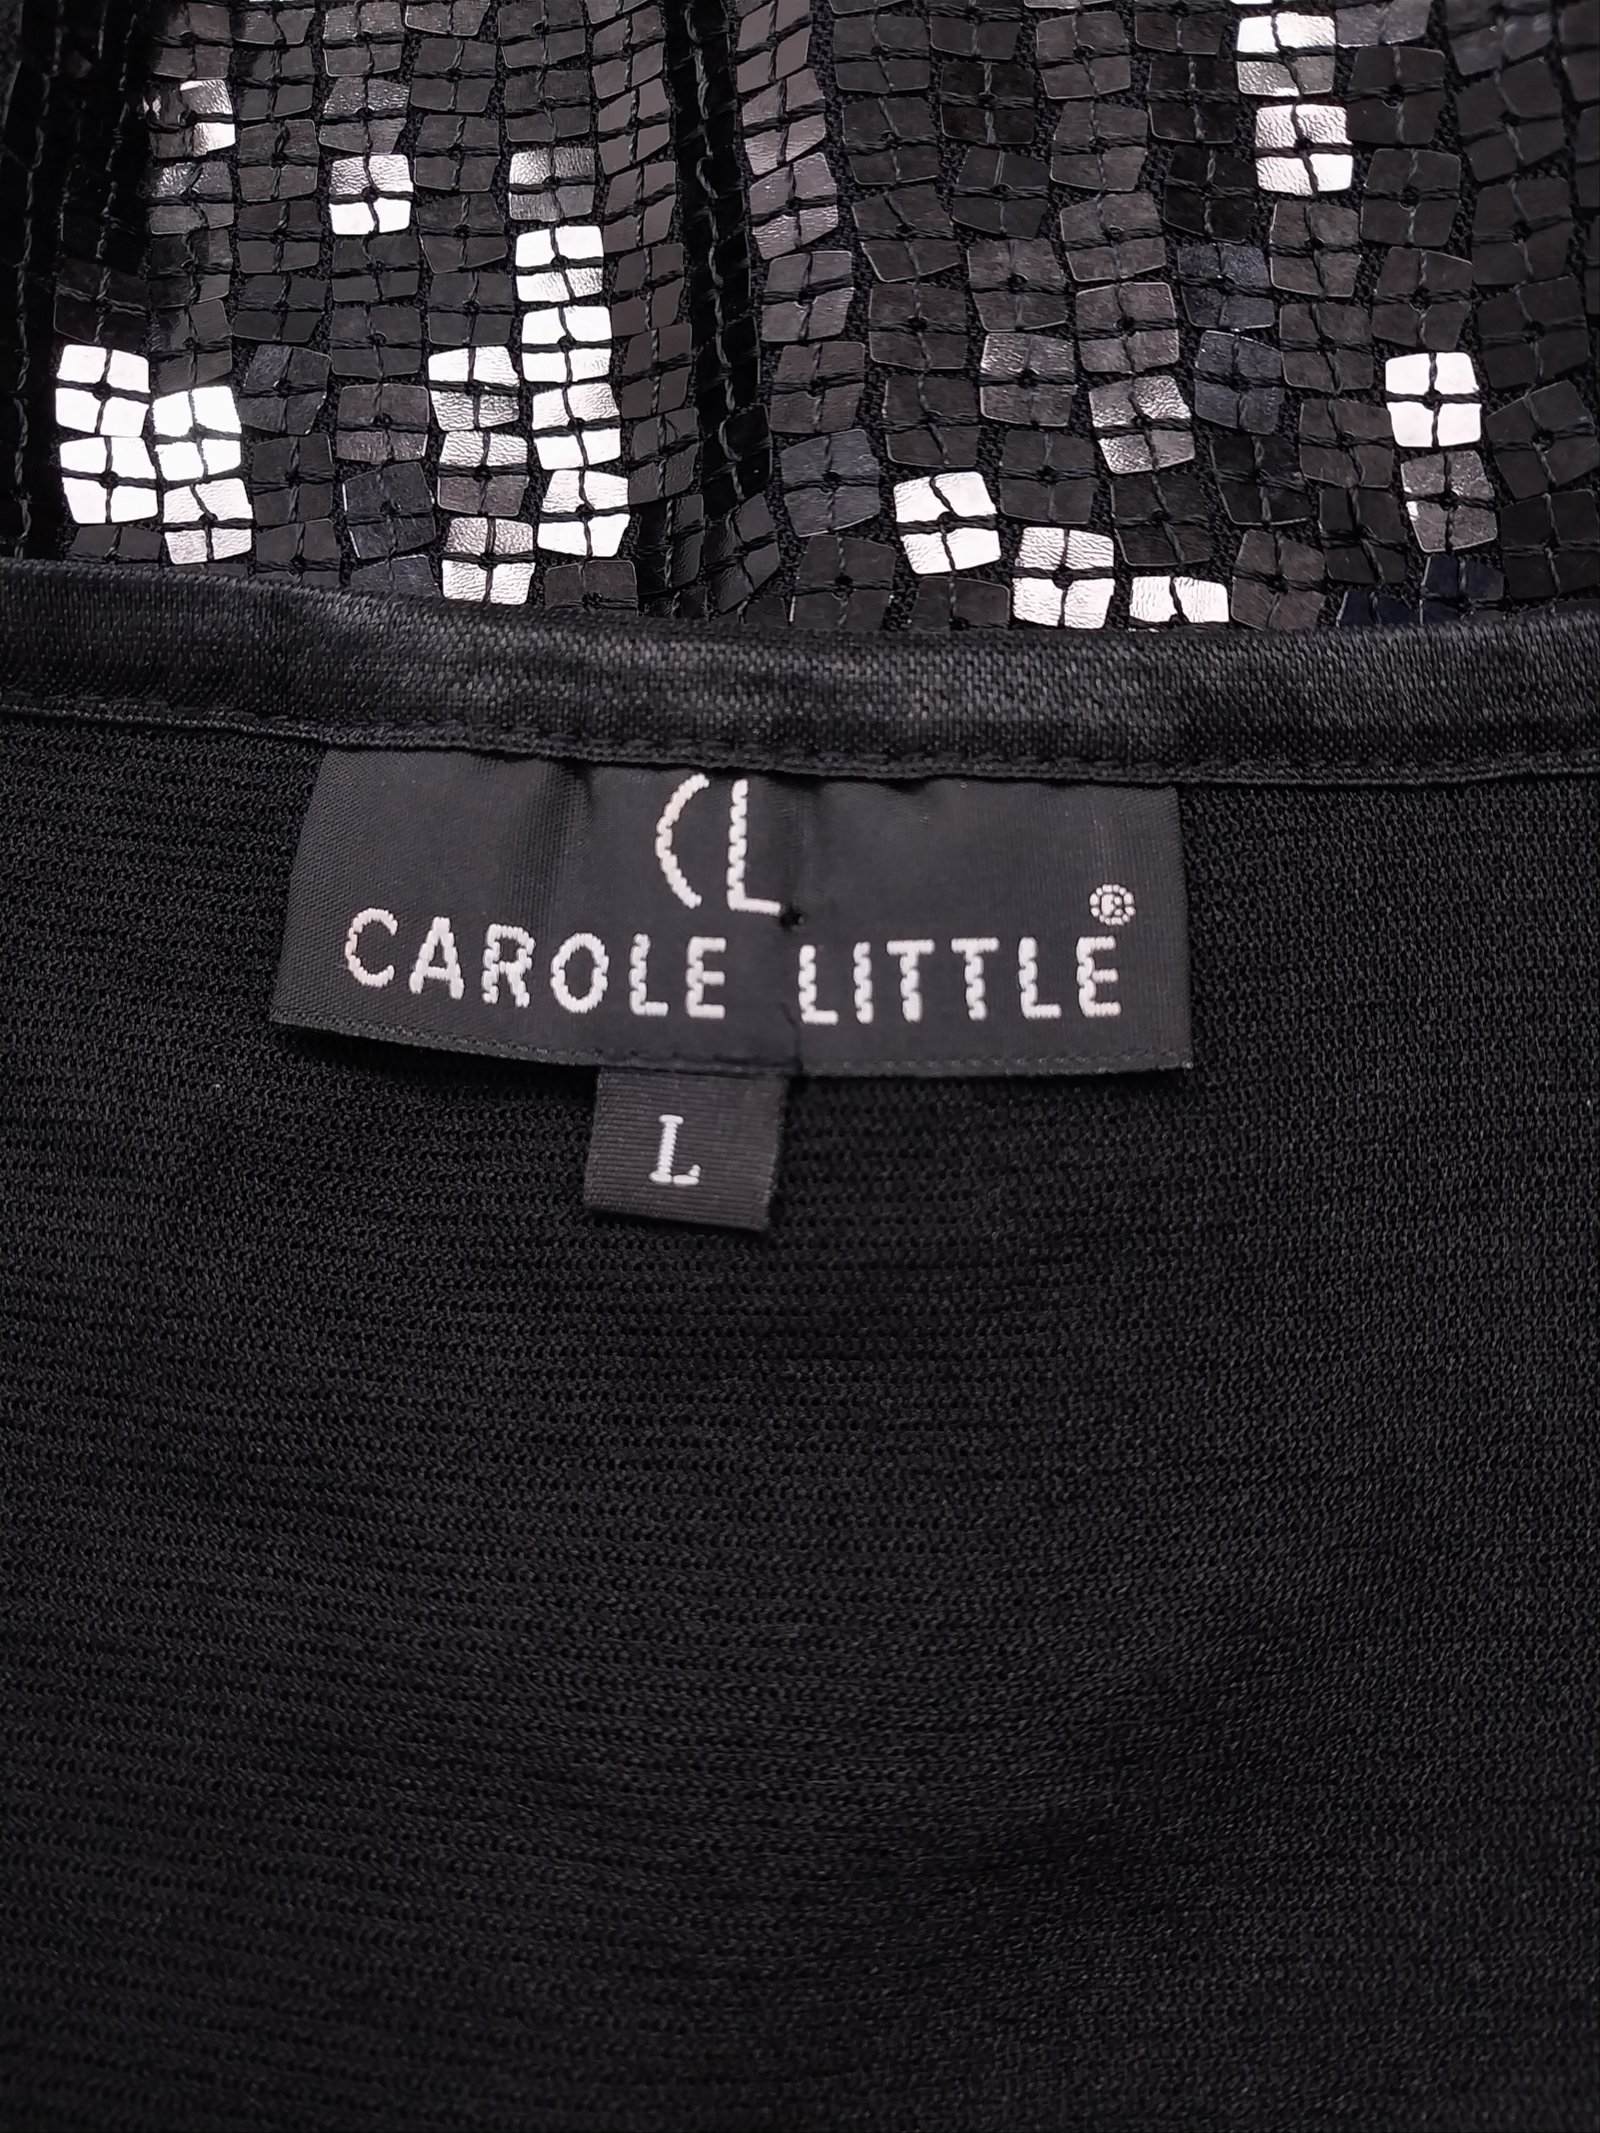 Blusas Casuales Carole Little 